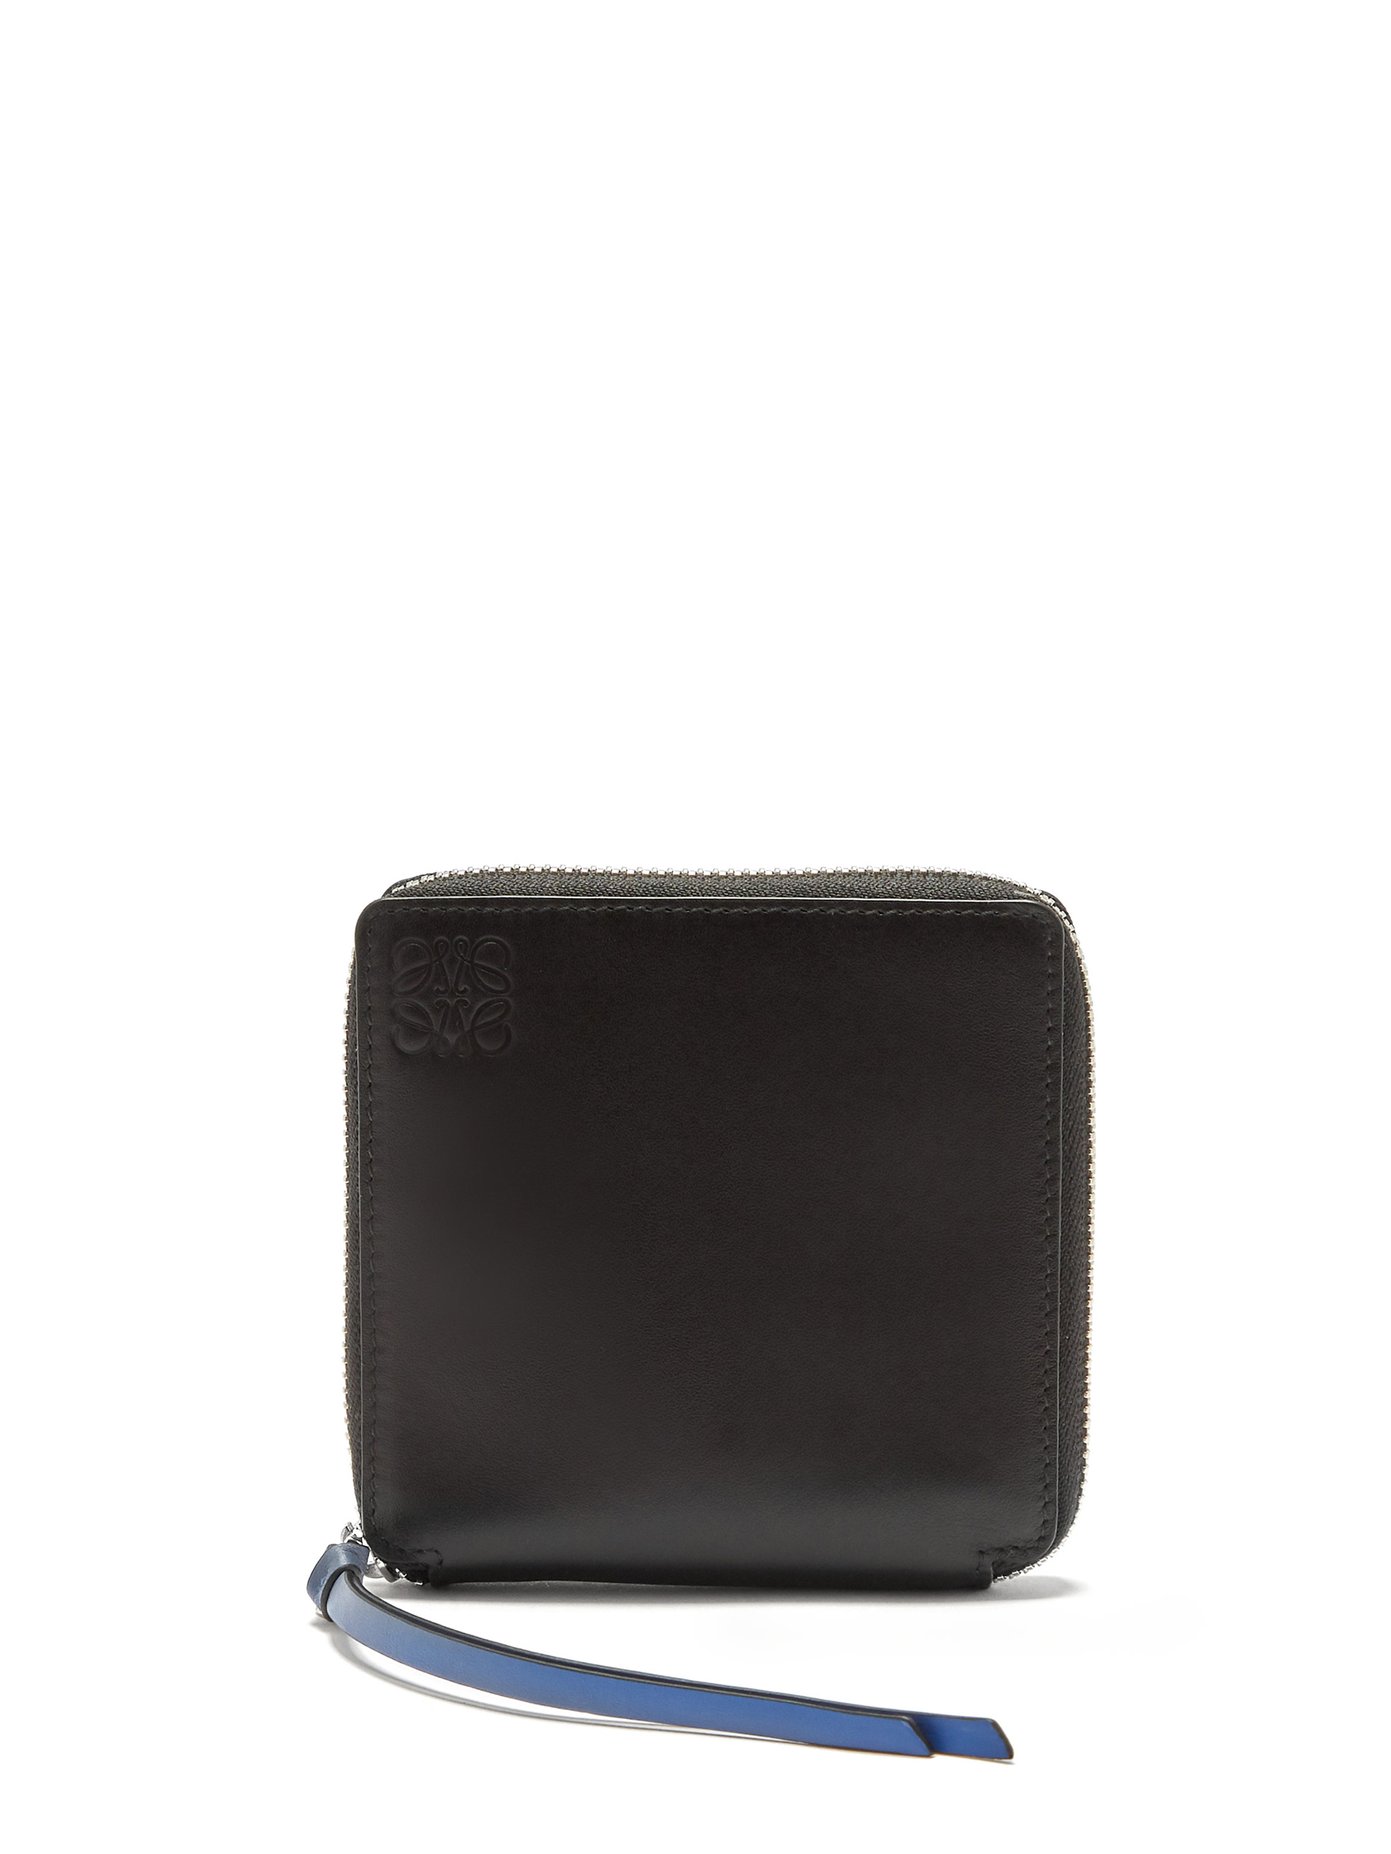 loewe metallic multicolor square zip wallet